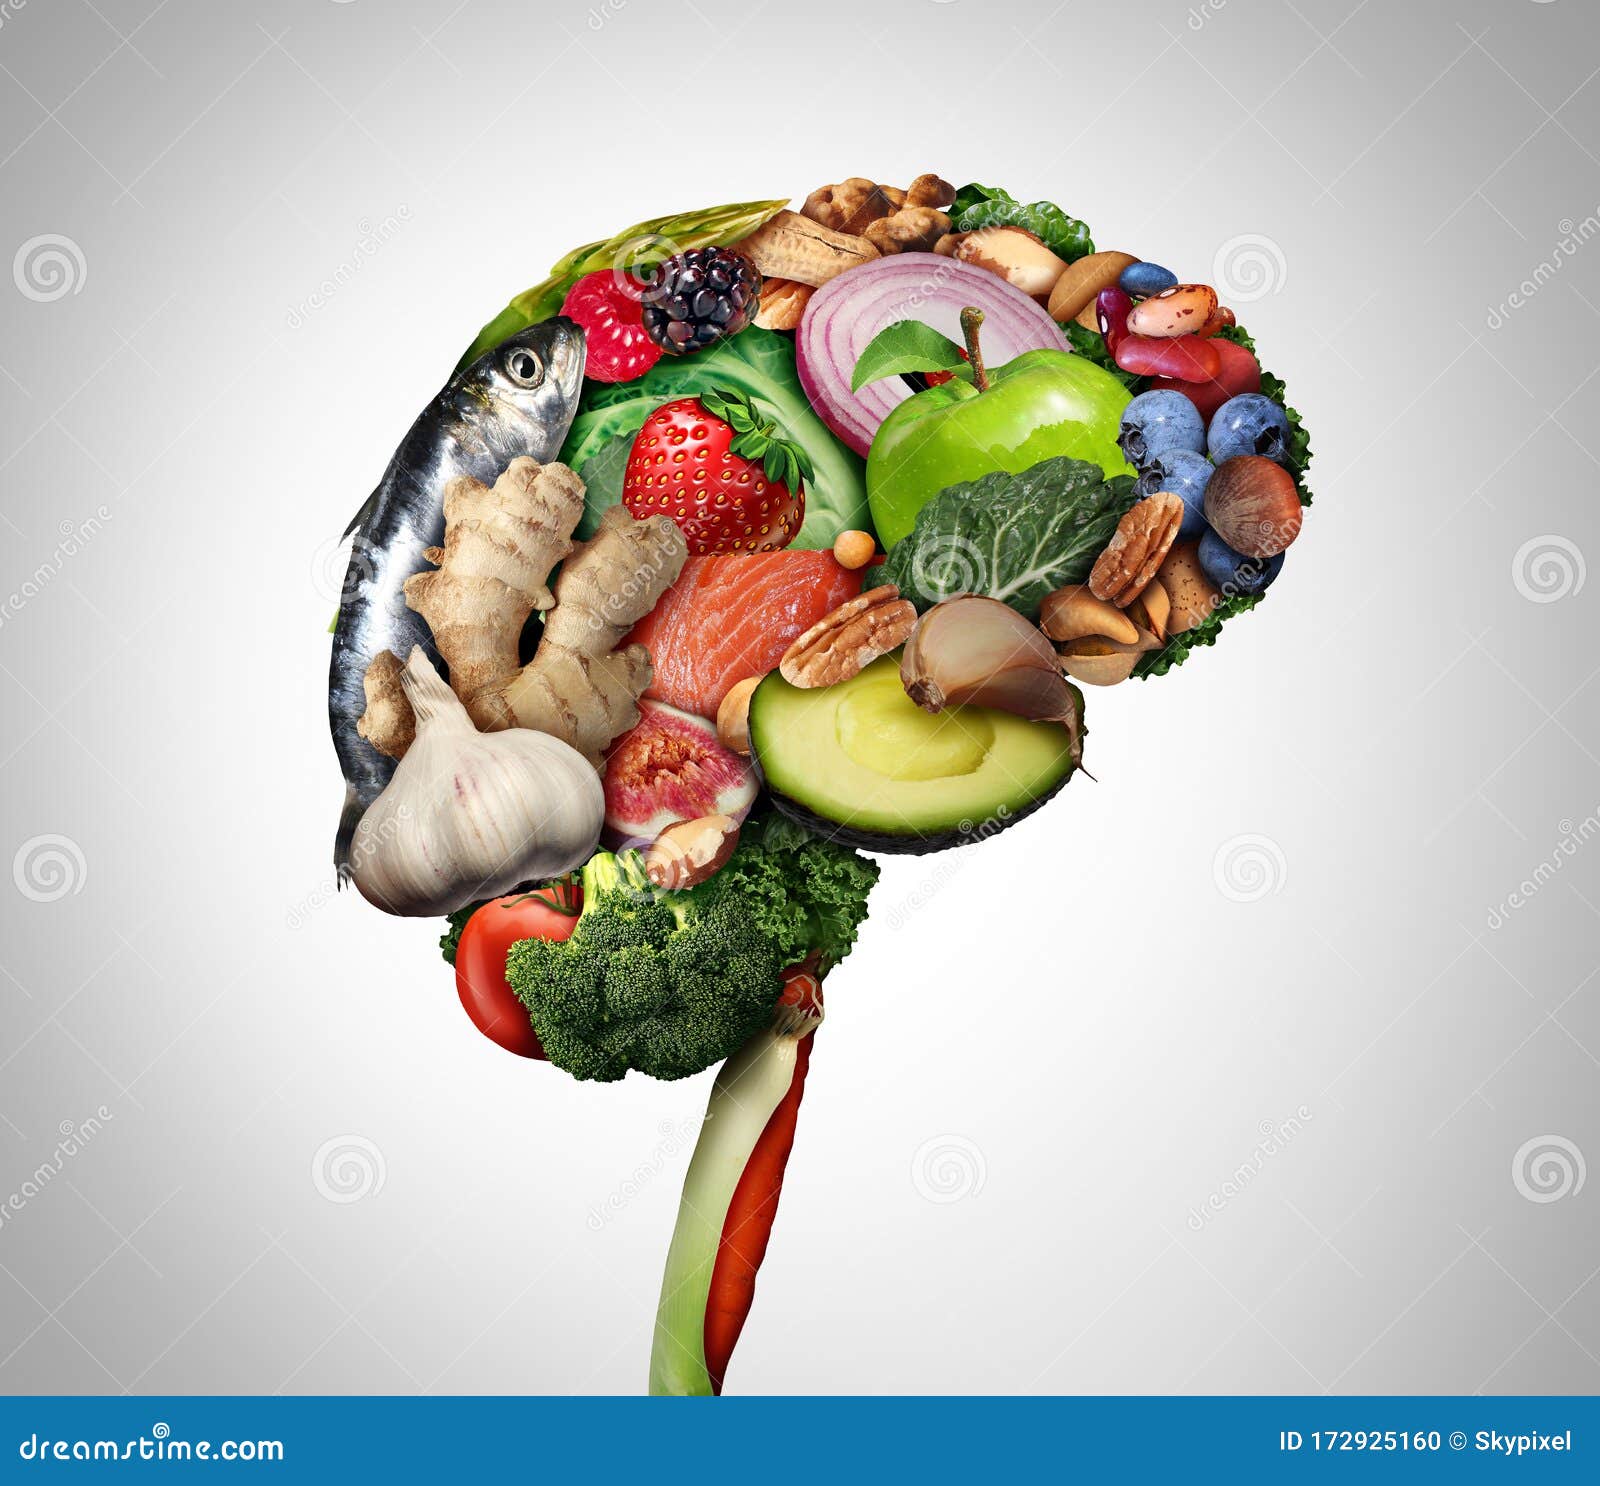 healthy brain food